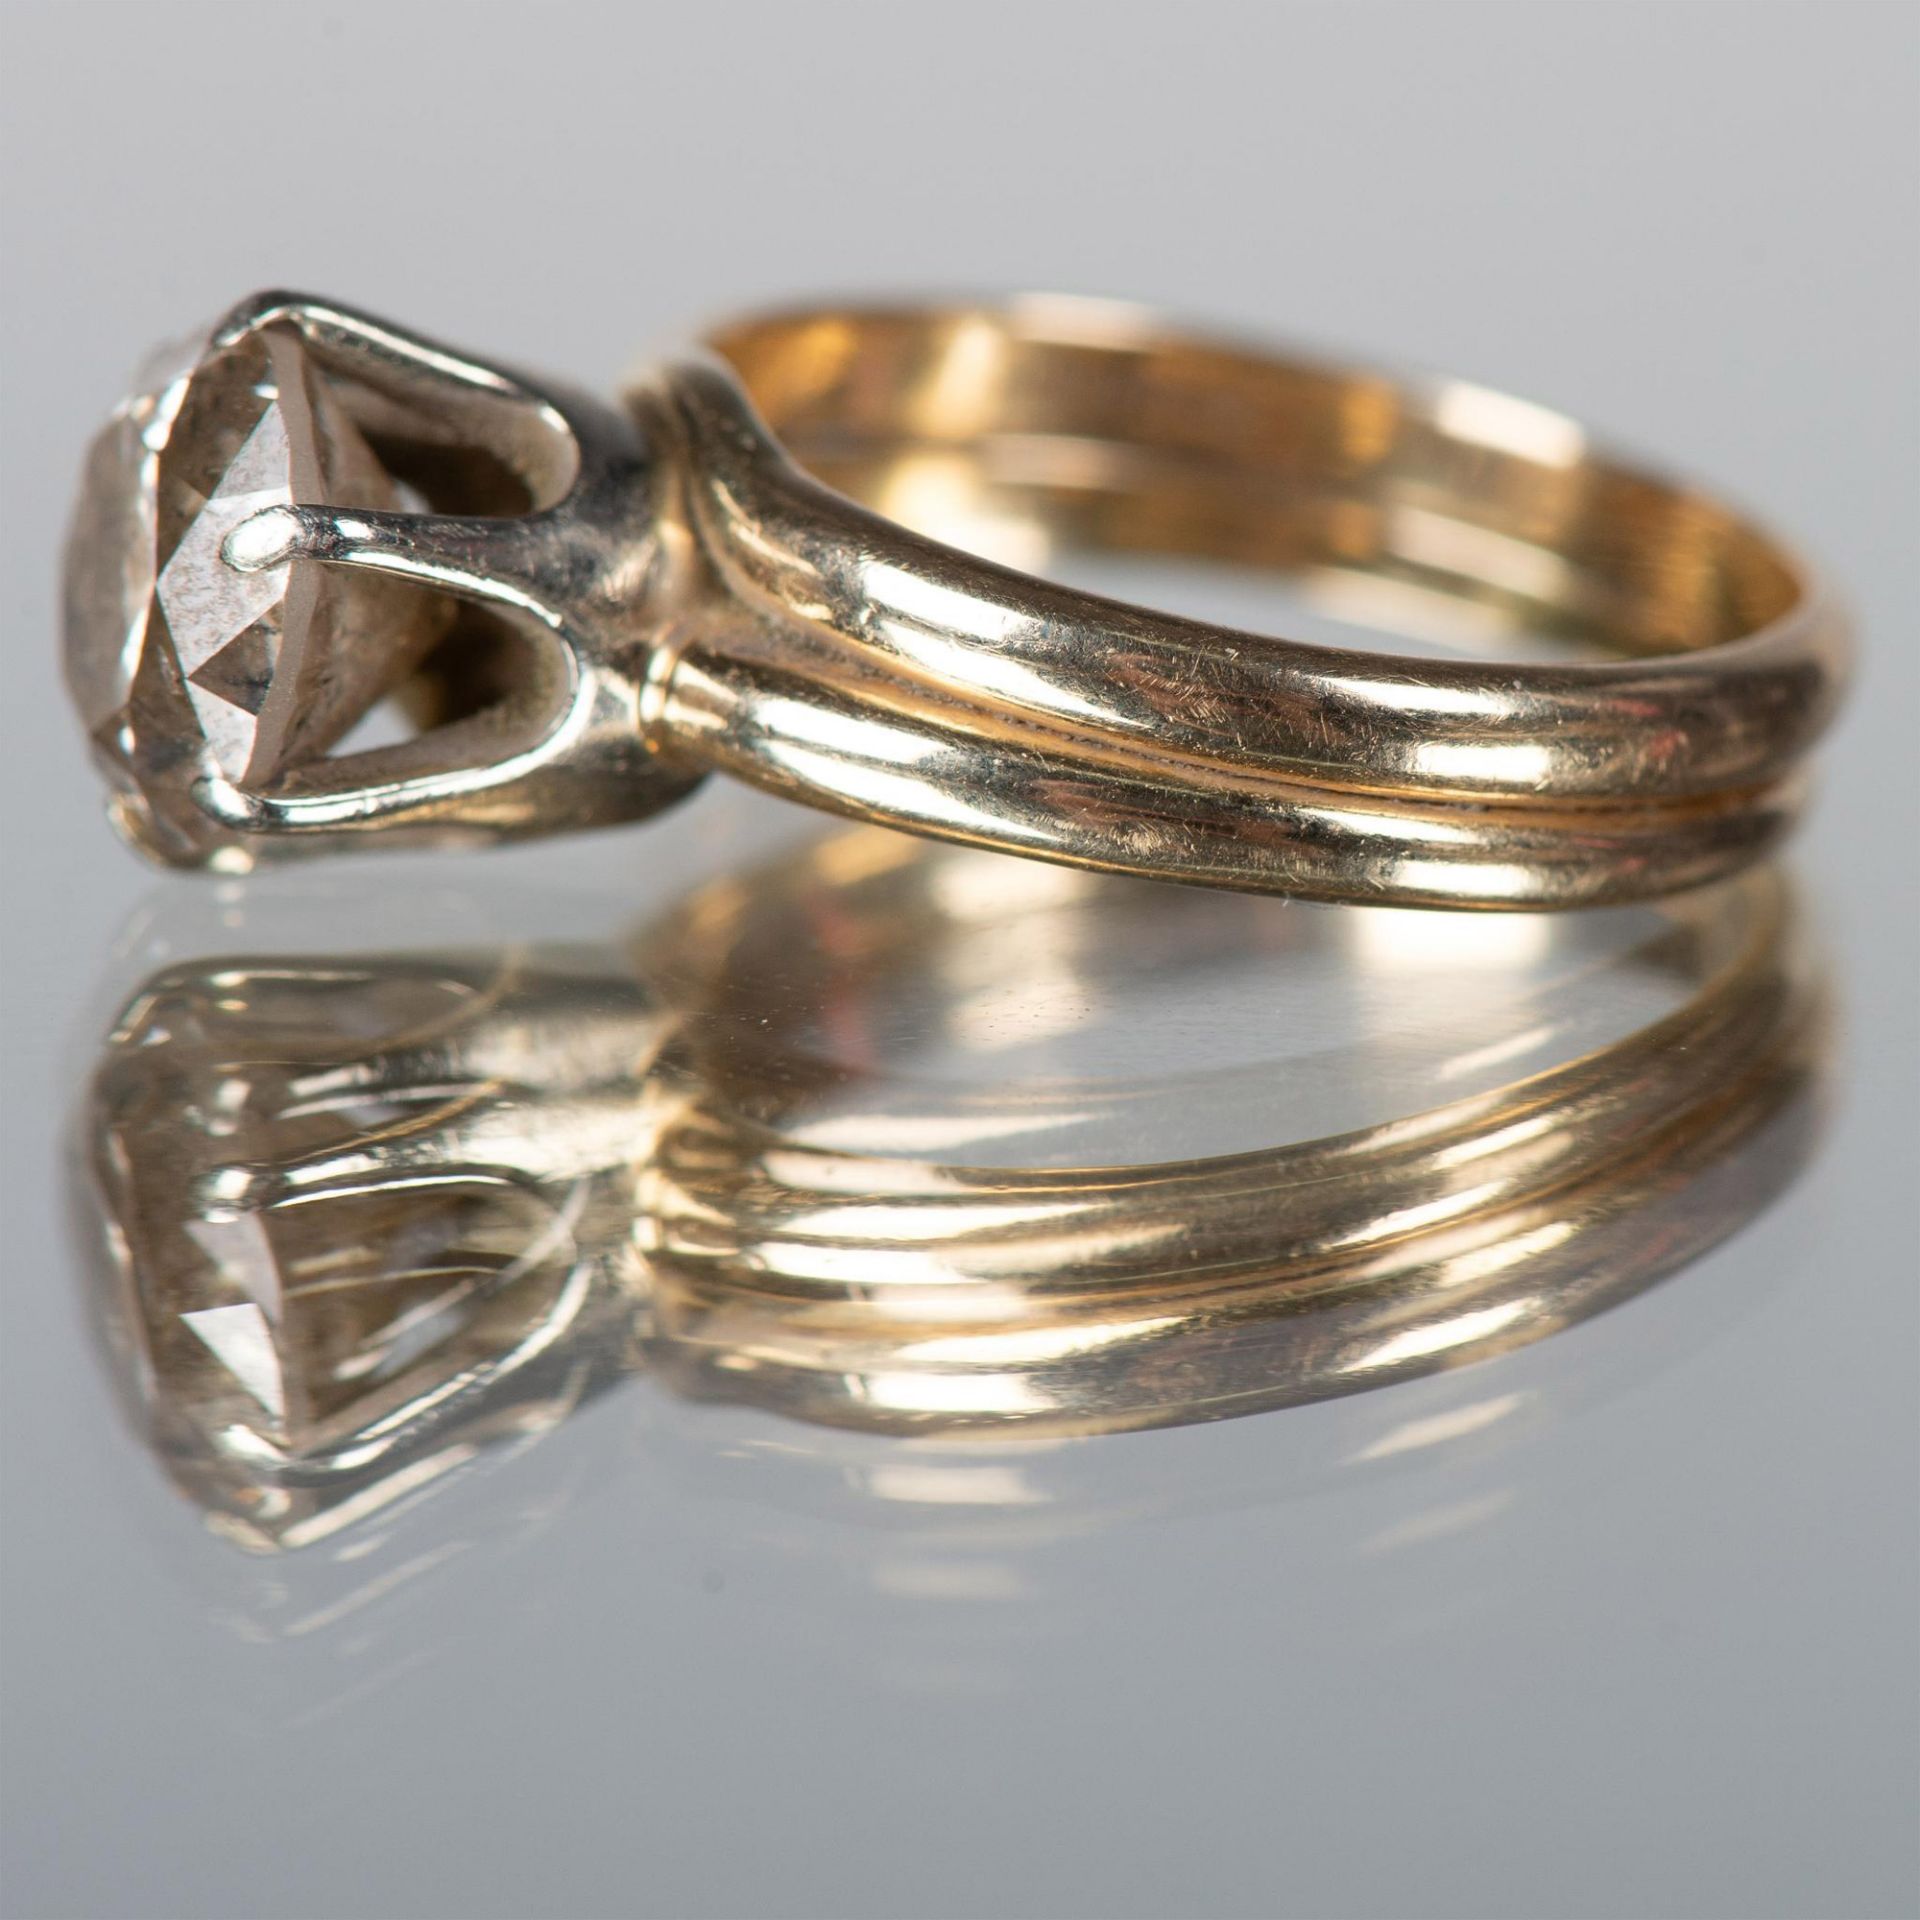 Stunning 3ct Diamond Ring in 14K Gold - Image 4 of 5